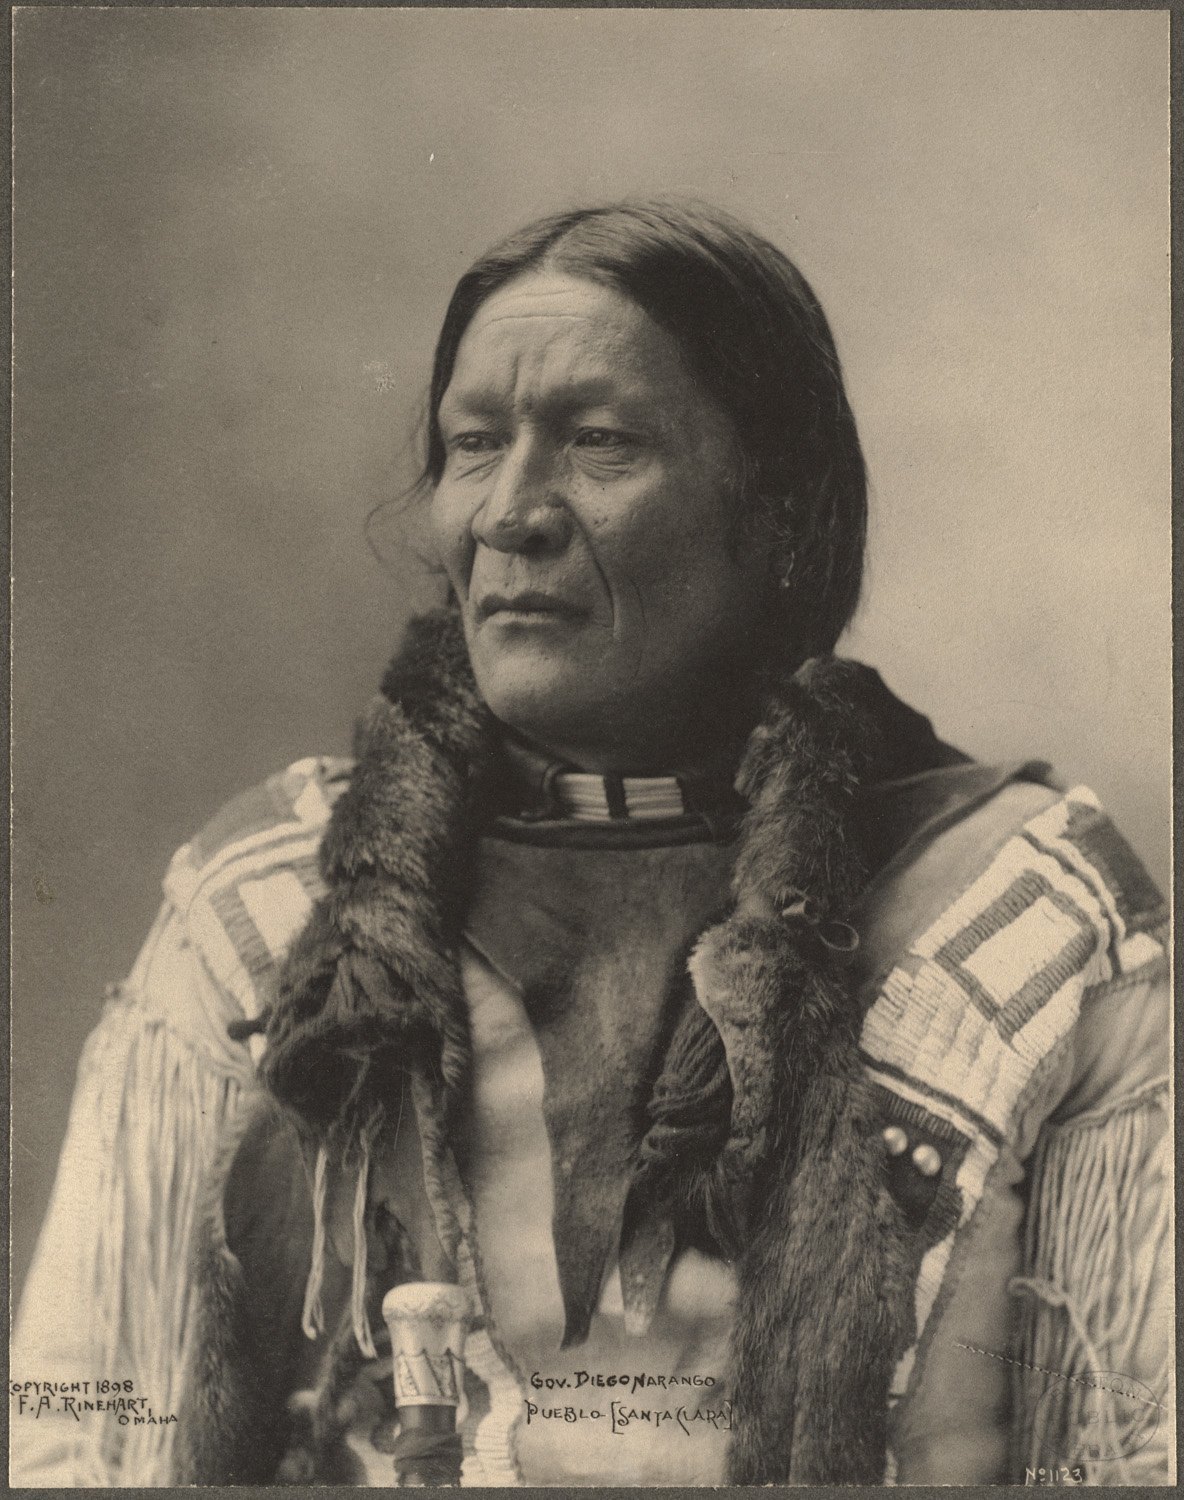 Gov. Diego Narango, Pueblo (Santa Clara), 1899. (Photo by Frank A. Rinehart)